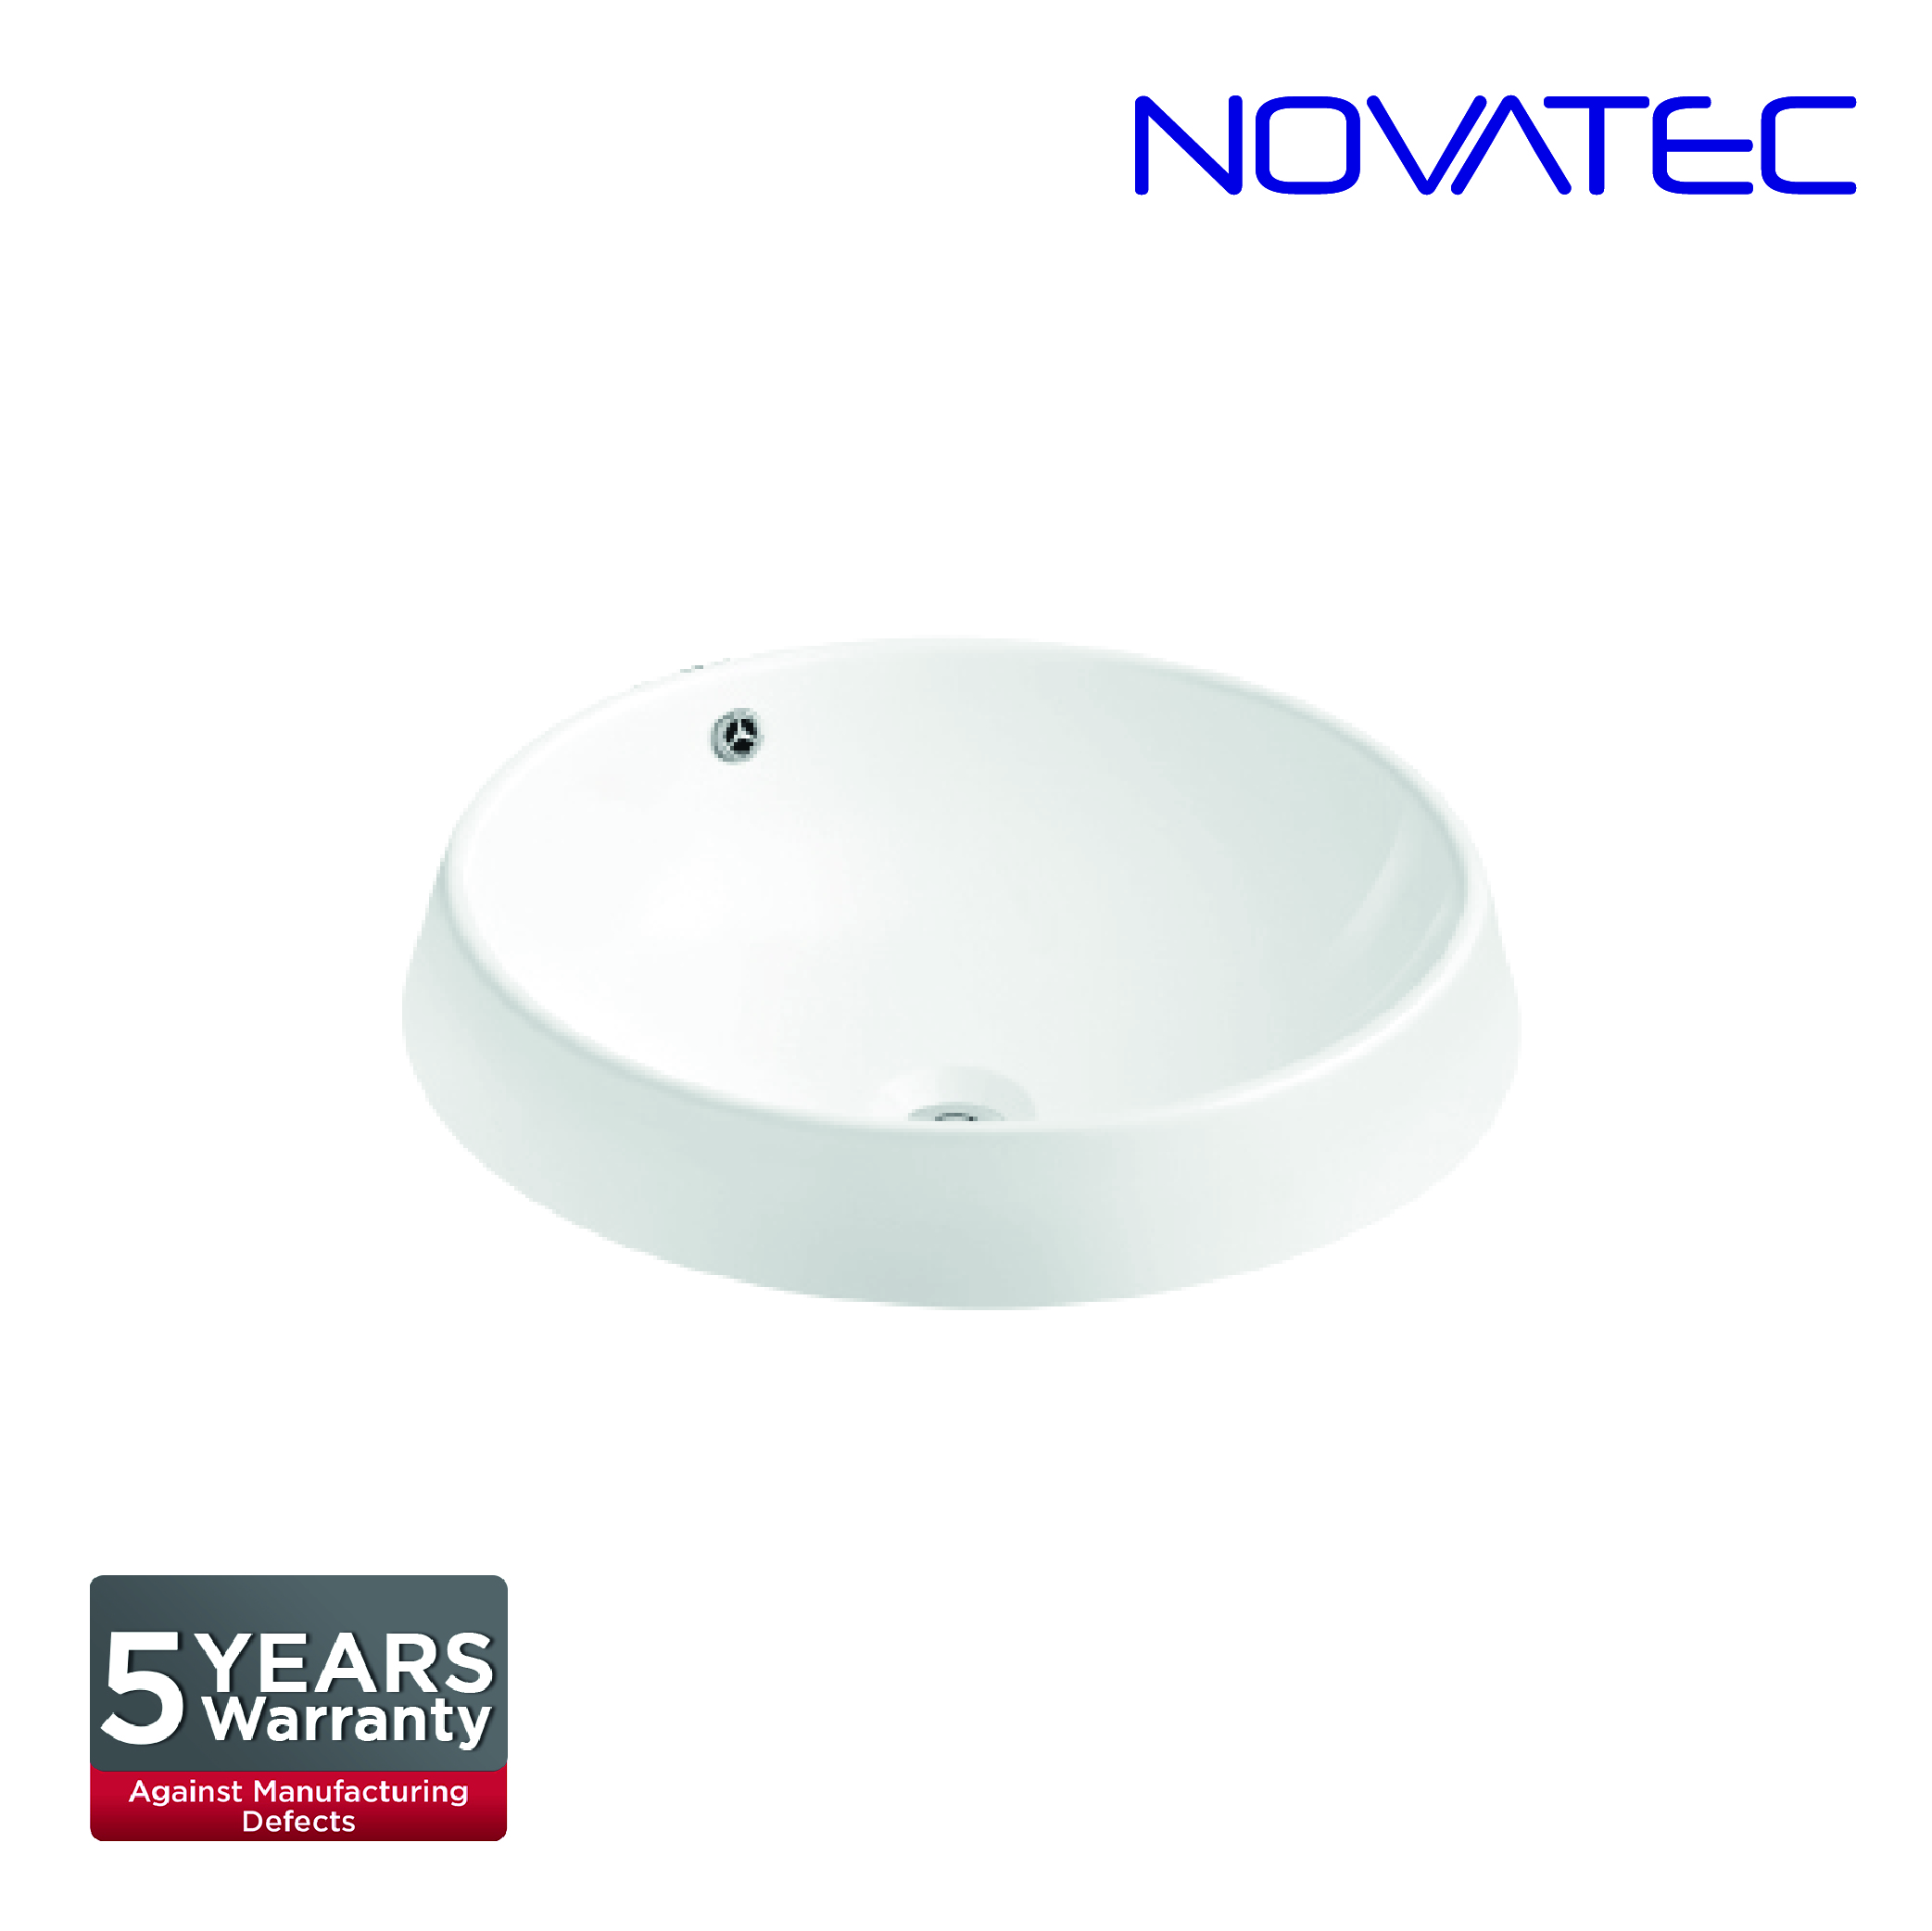 Novatec SW Mitilini 480 Round Above Counter Basin AT-AC6001